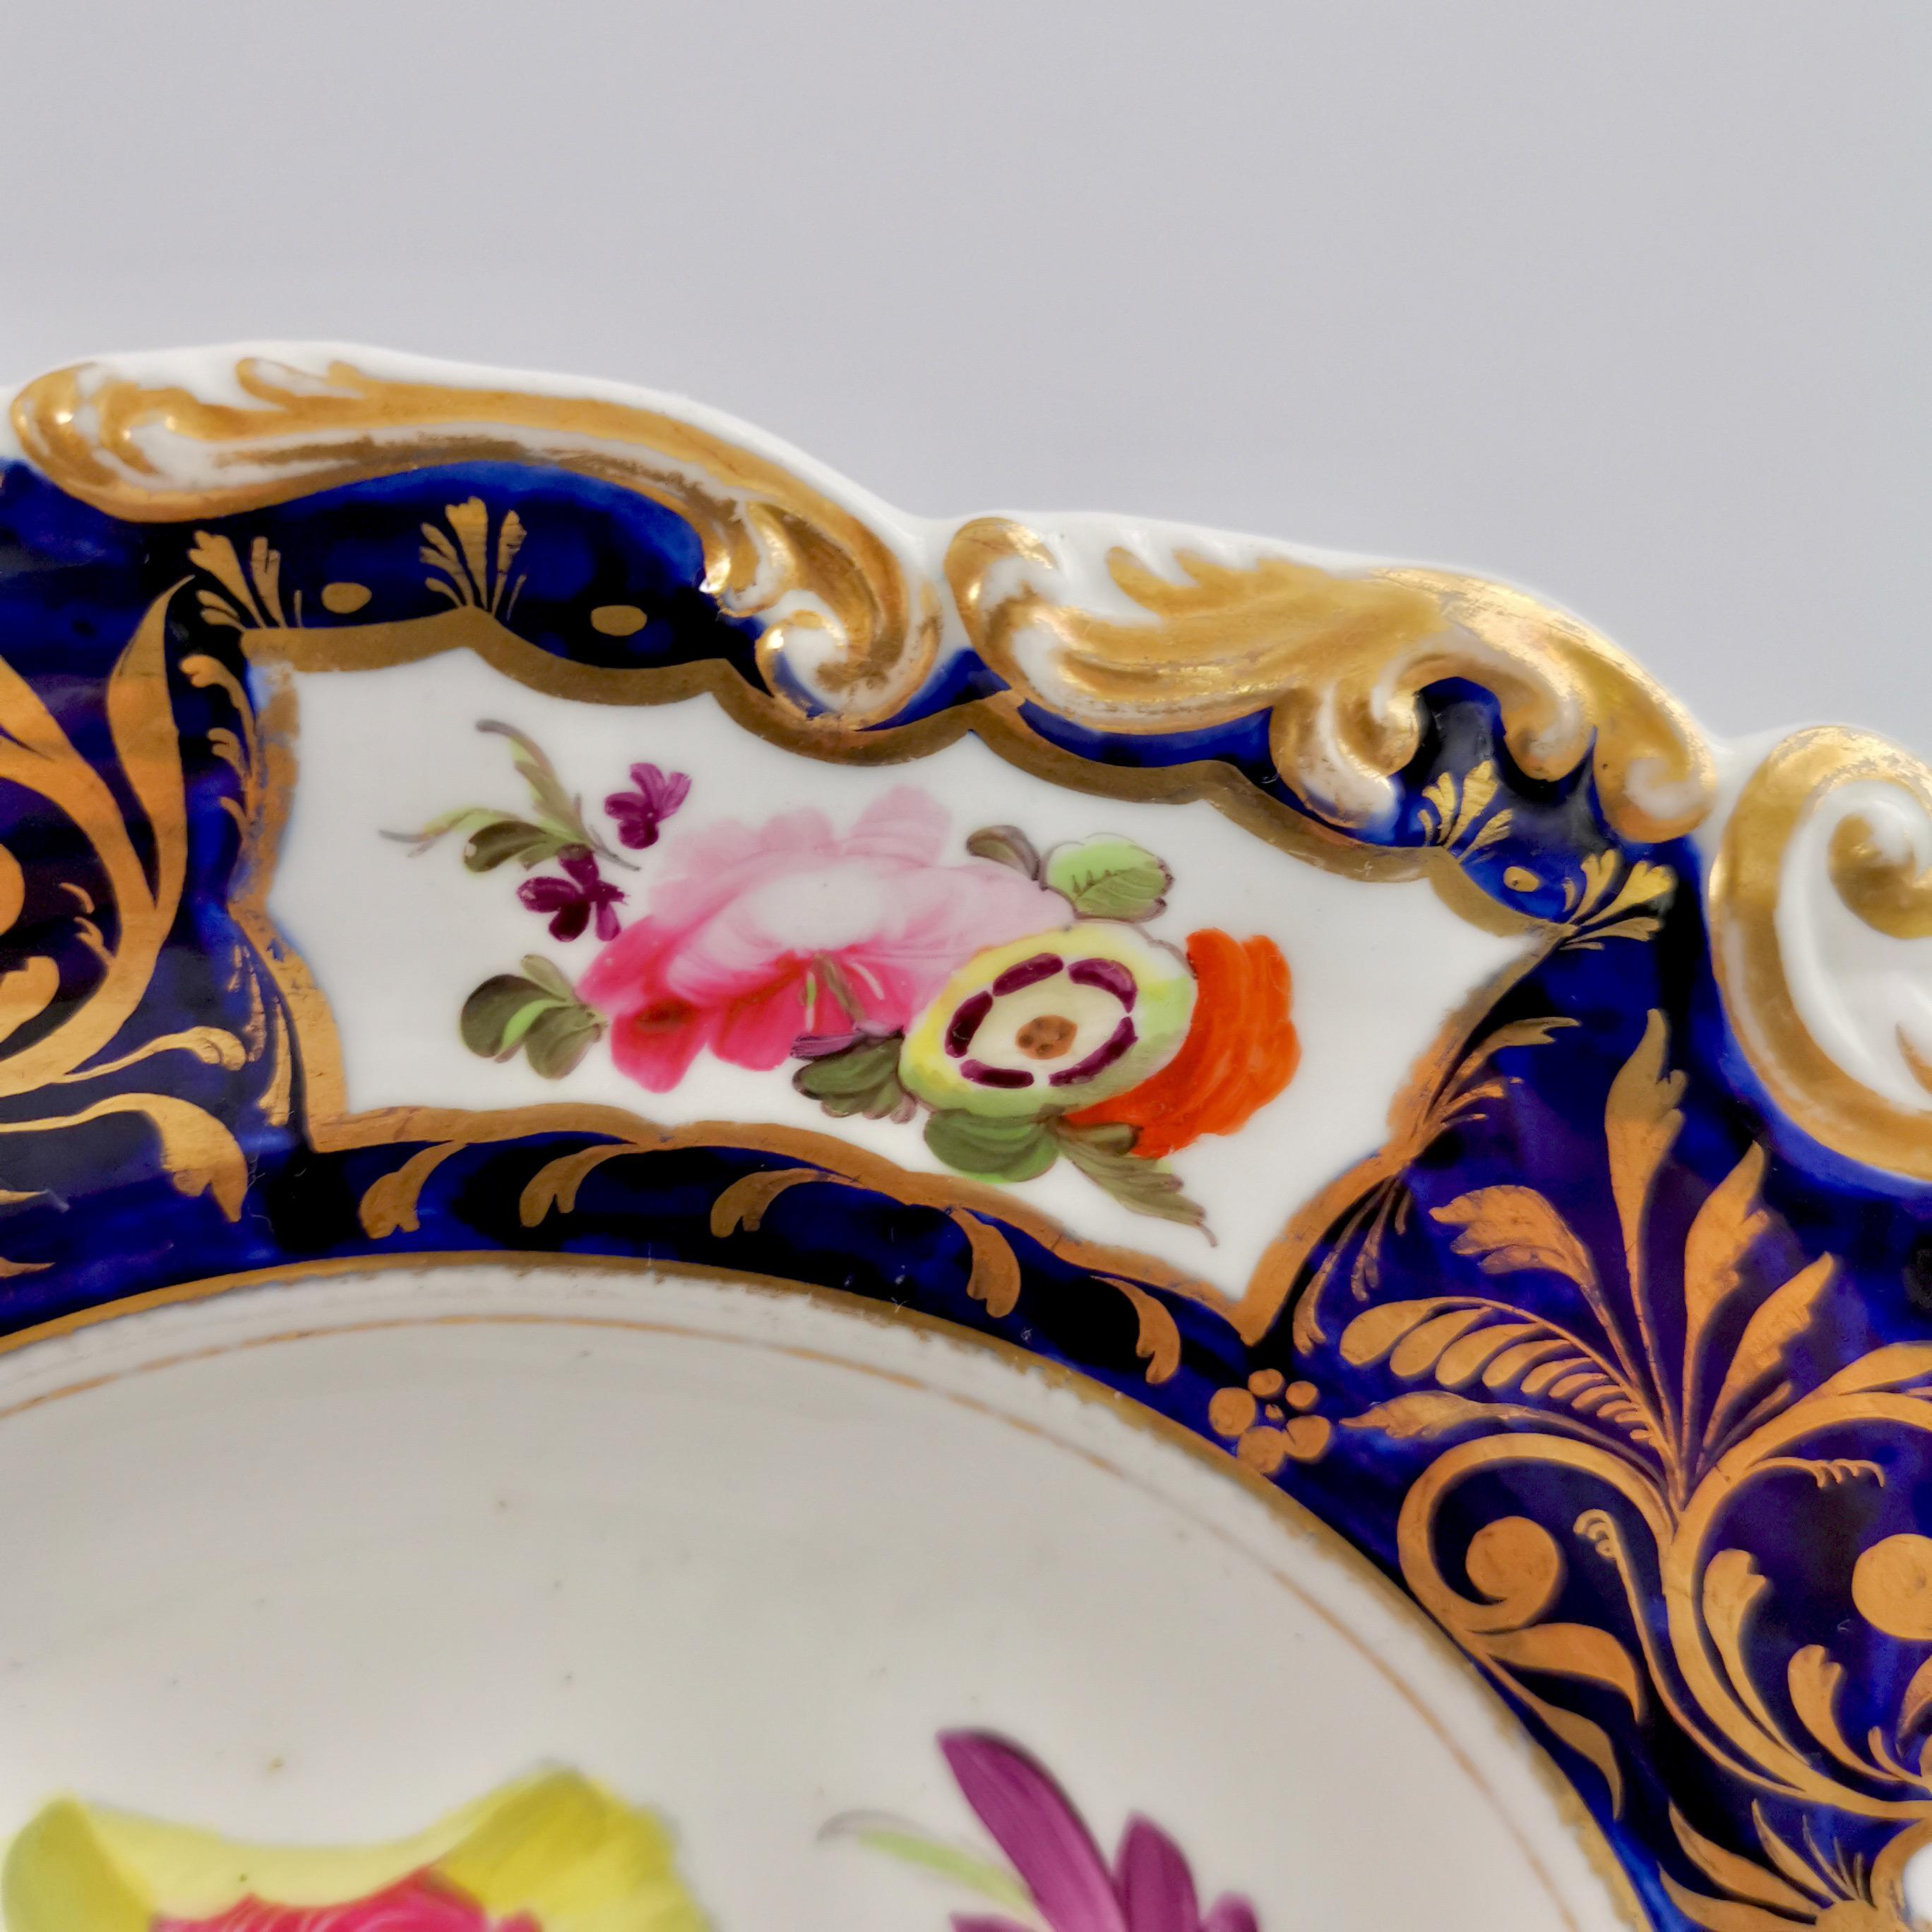 Machin Porcelain Plate, Cobalt Blue, Gilt and Flowers, Regency, circa 1820 3